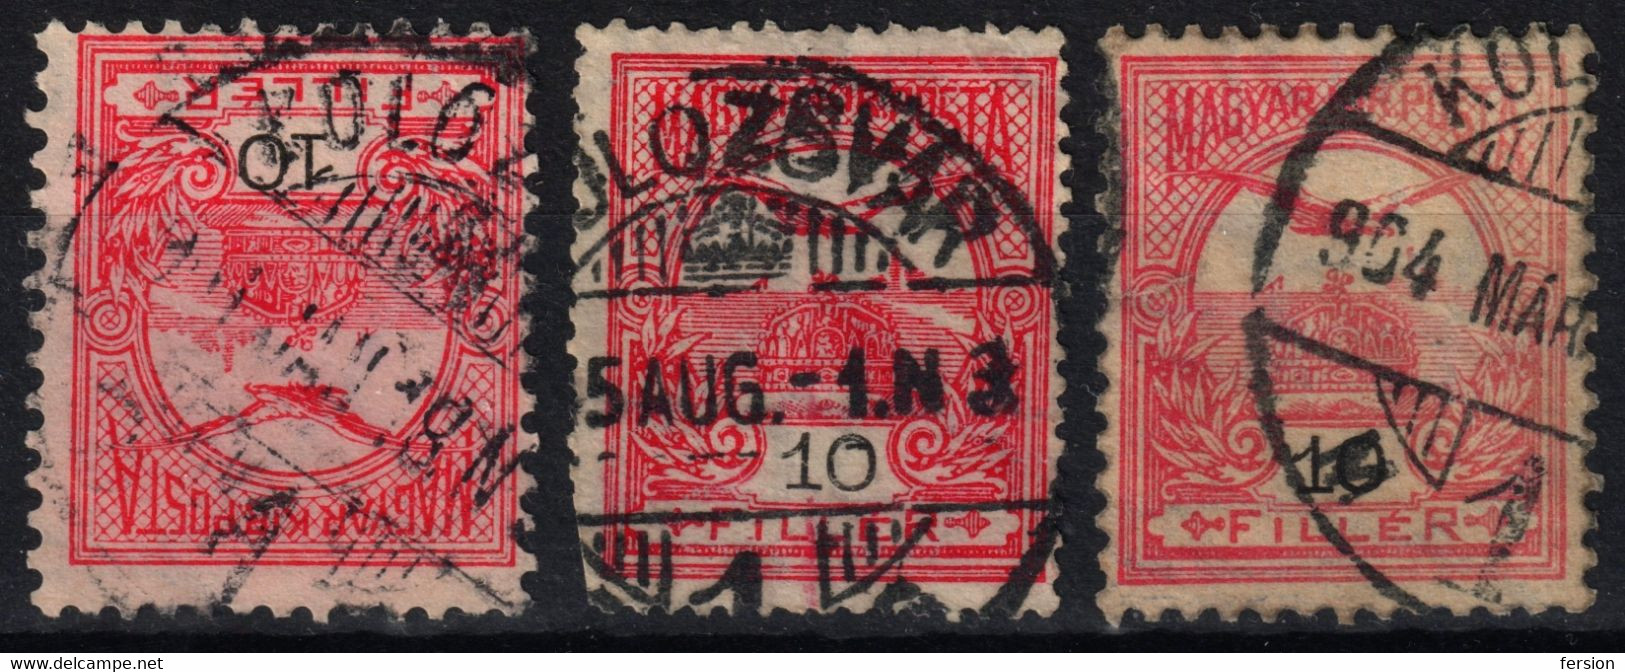 KOLOZSVÁR CLUJ-NAPOCA Postmark LOT TURUL WMK 3. 1900 Hungary Romania Banat Transylvania KOLOZS County KuK K.u.K 10 Fill - Transsylvanië